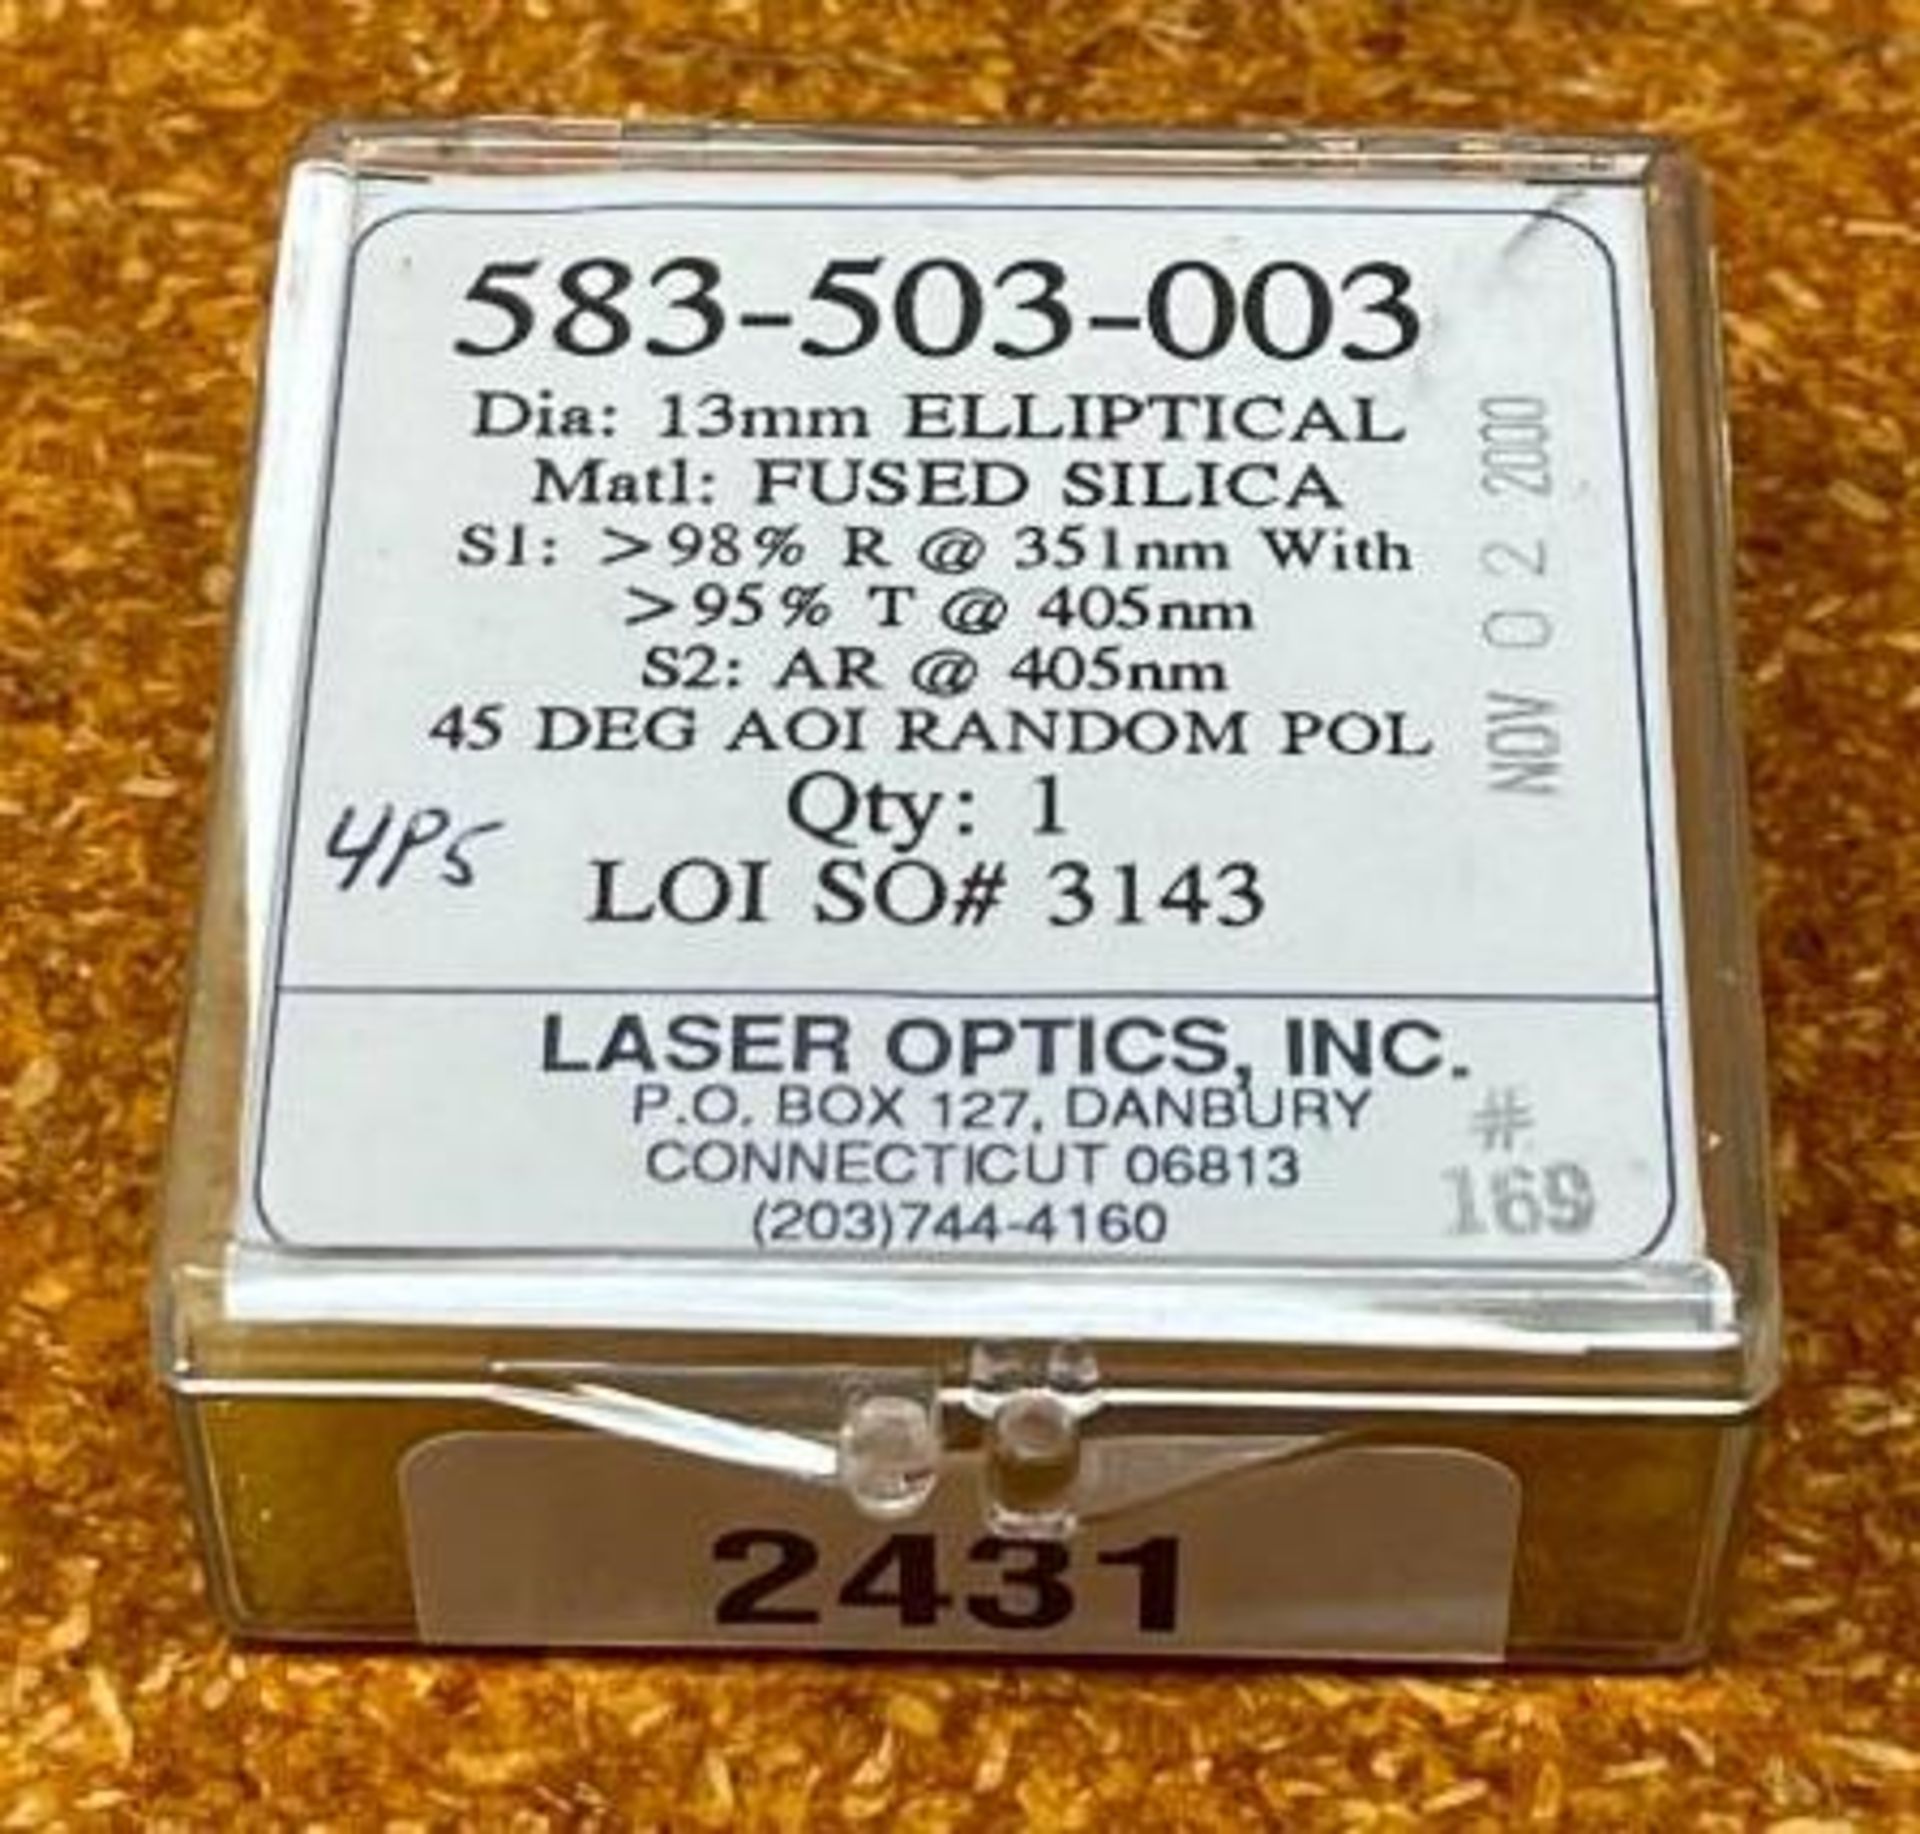 13mm ELLIPTICAL FUSED SILICA BRAND/MODEL: LASER OPTICS 583-503-003 INFORMATION: 45-DEGREE AOI RANDOM - Image 2 of 2